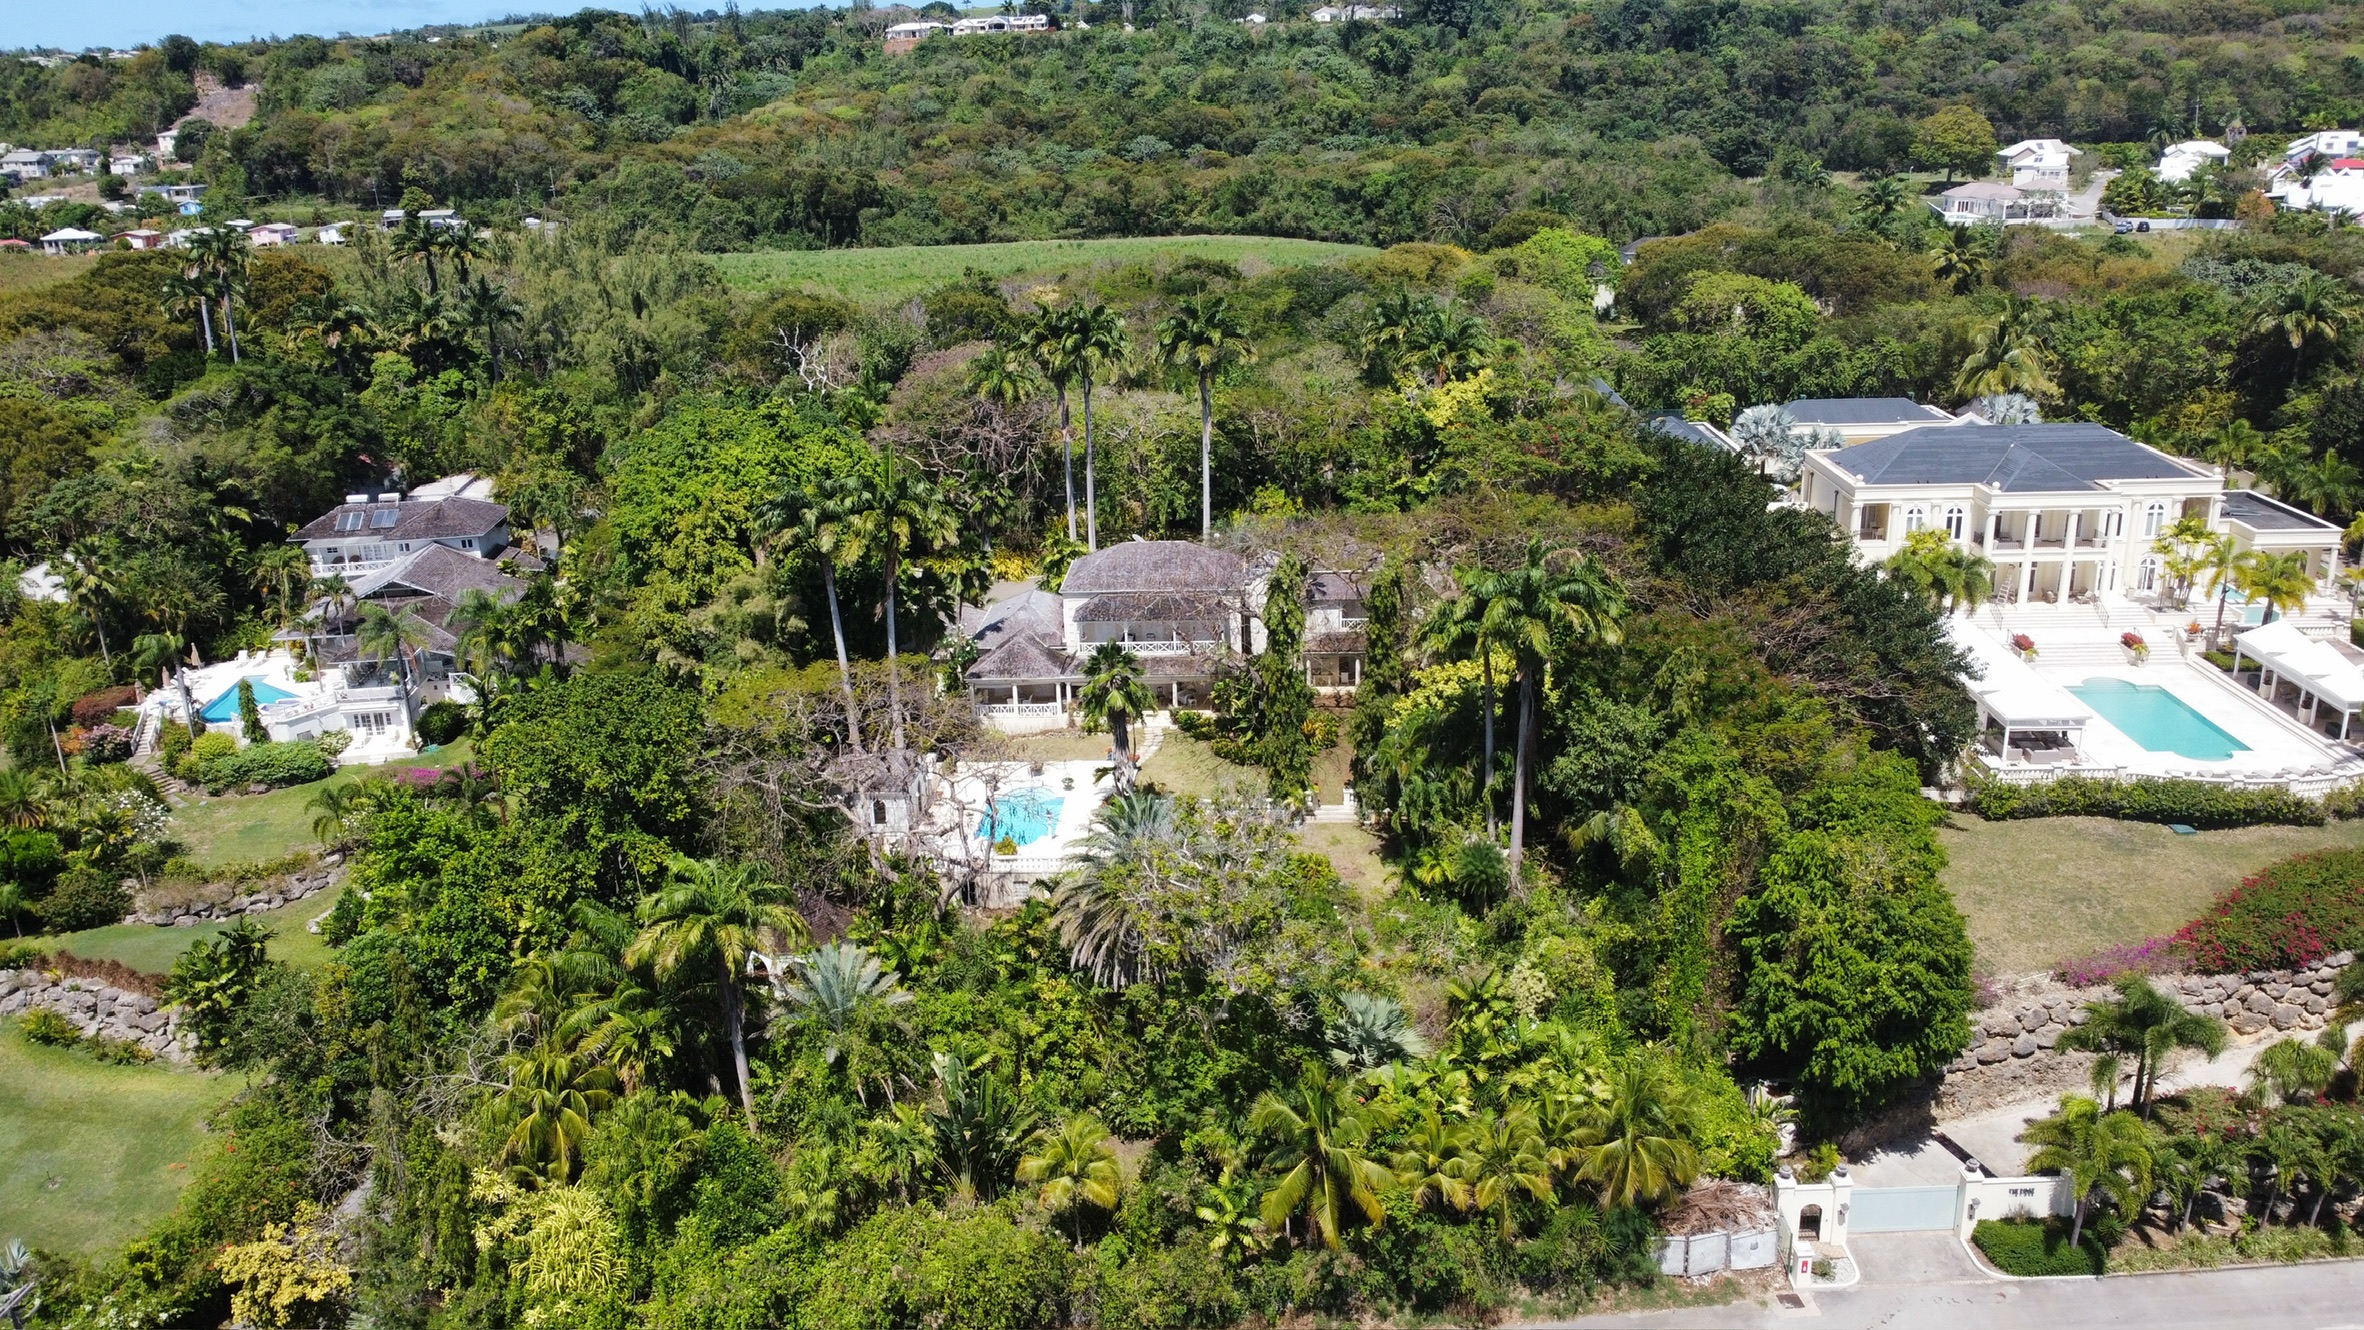 Cane Heaven, Bakers Ridge, St Peter, Barbados